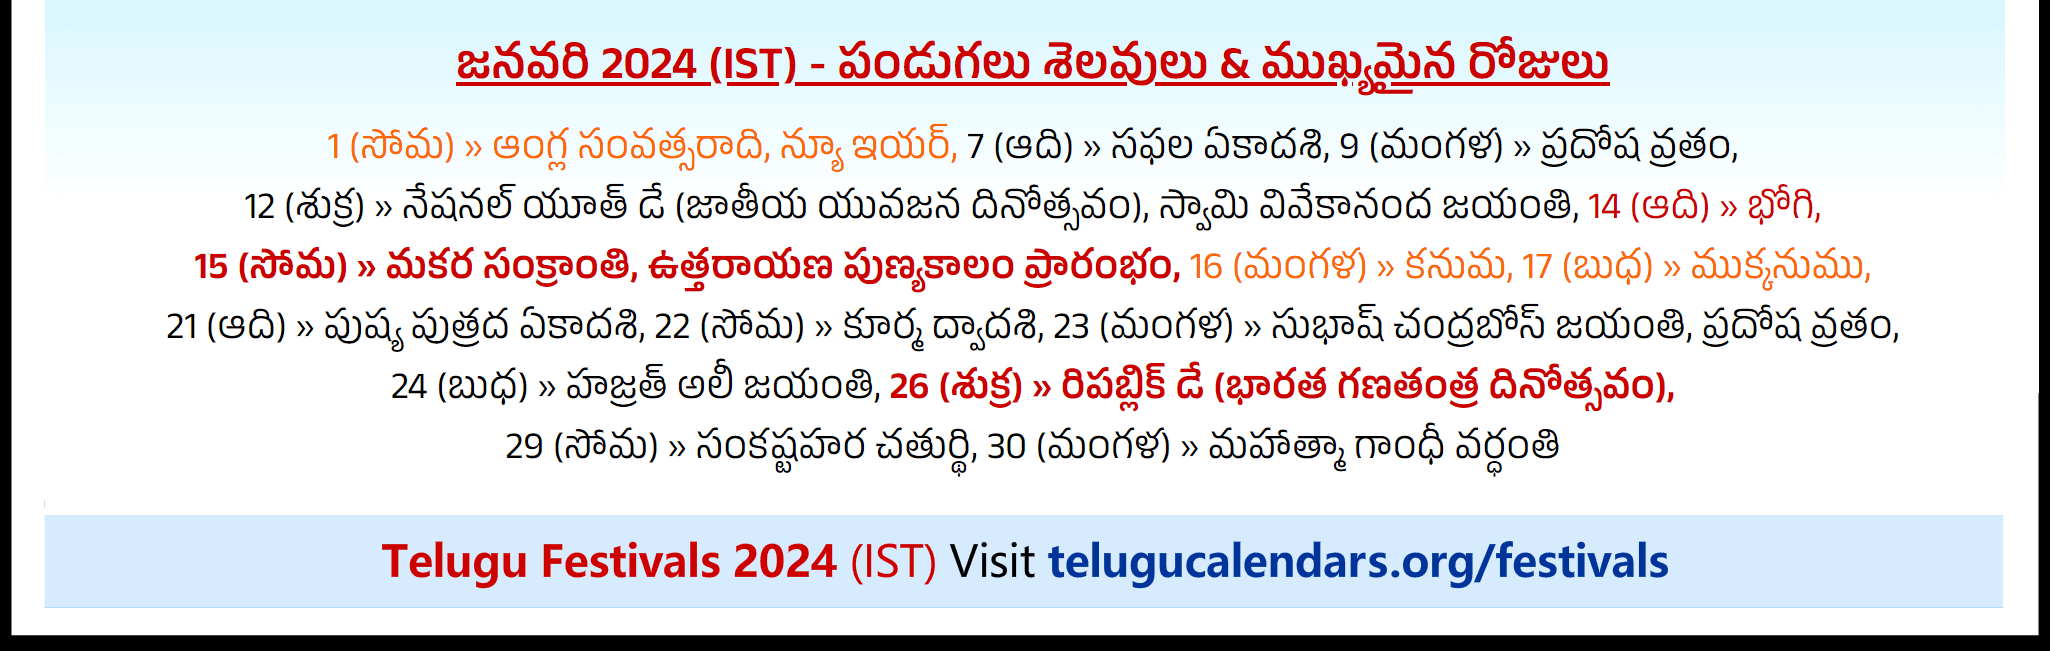 Telugu Festivals 2024 January London